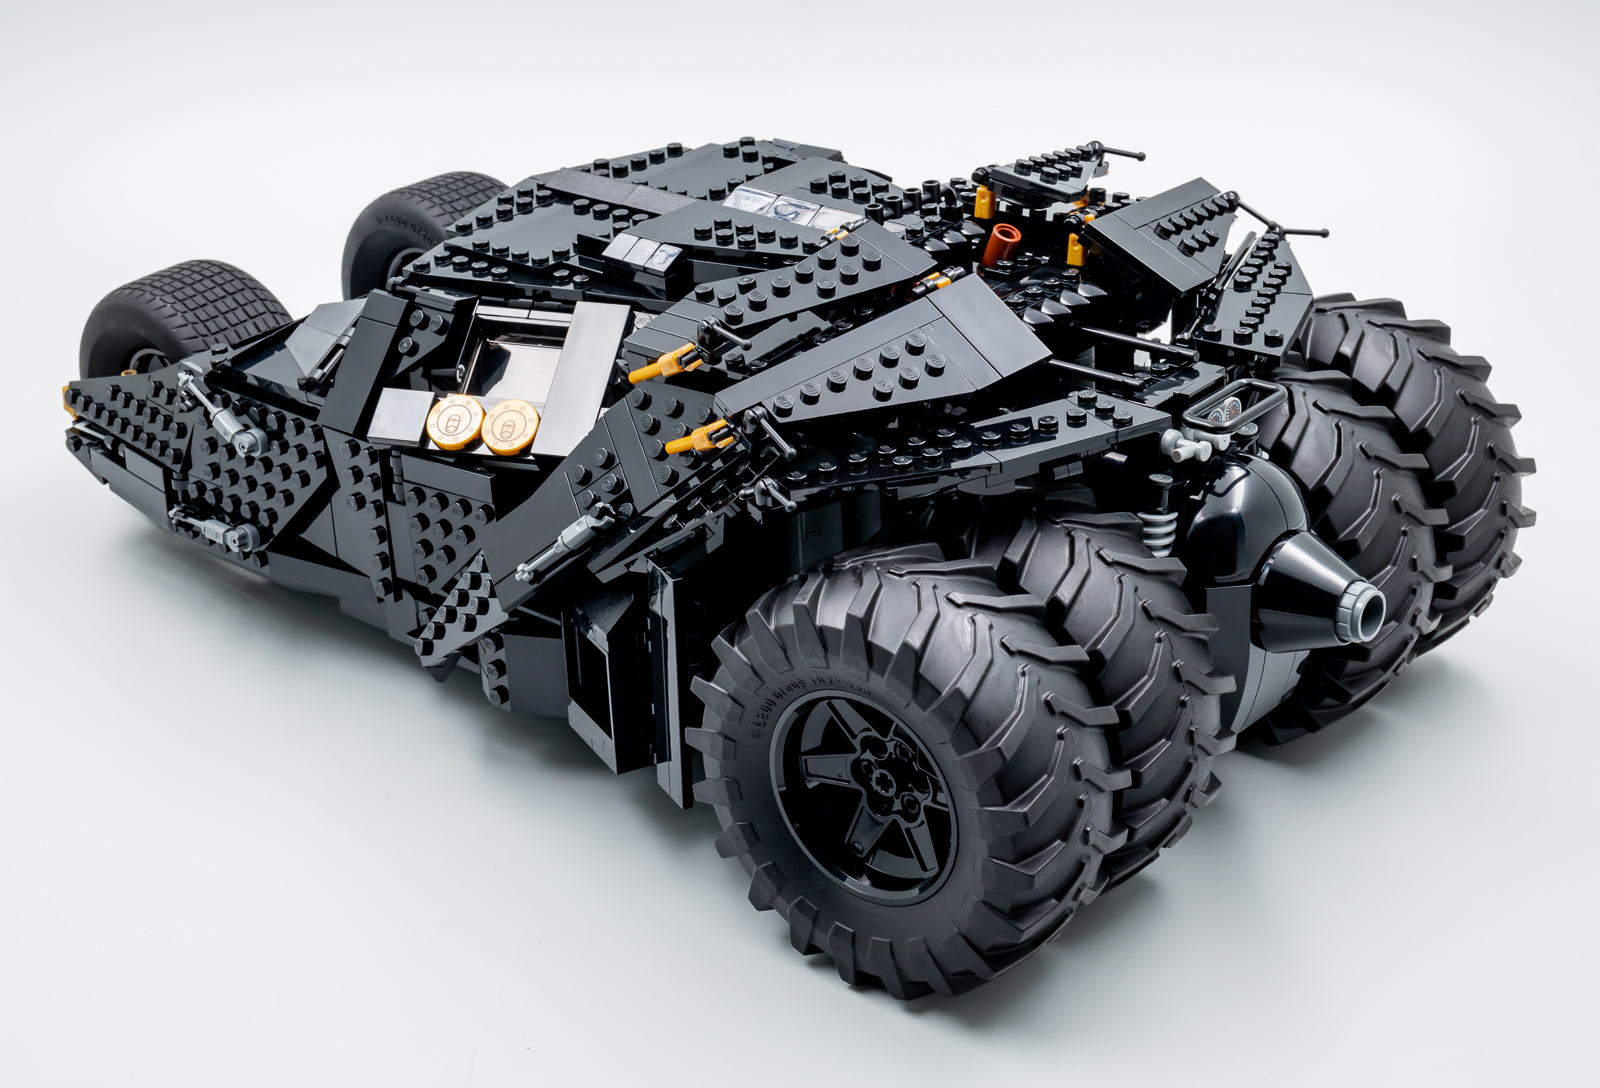 LEGO Batman 76240 Batmobile Tumbler review: hello from 2014